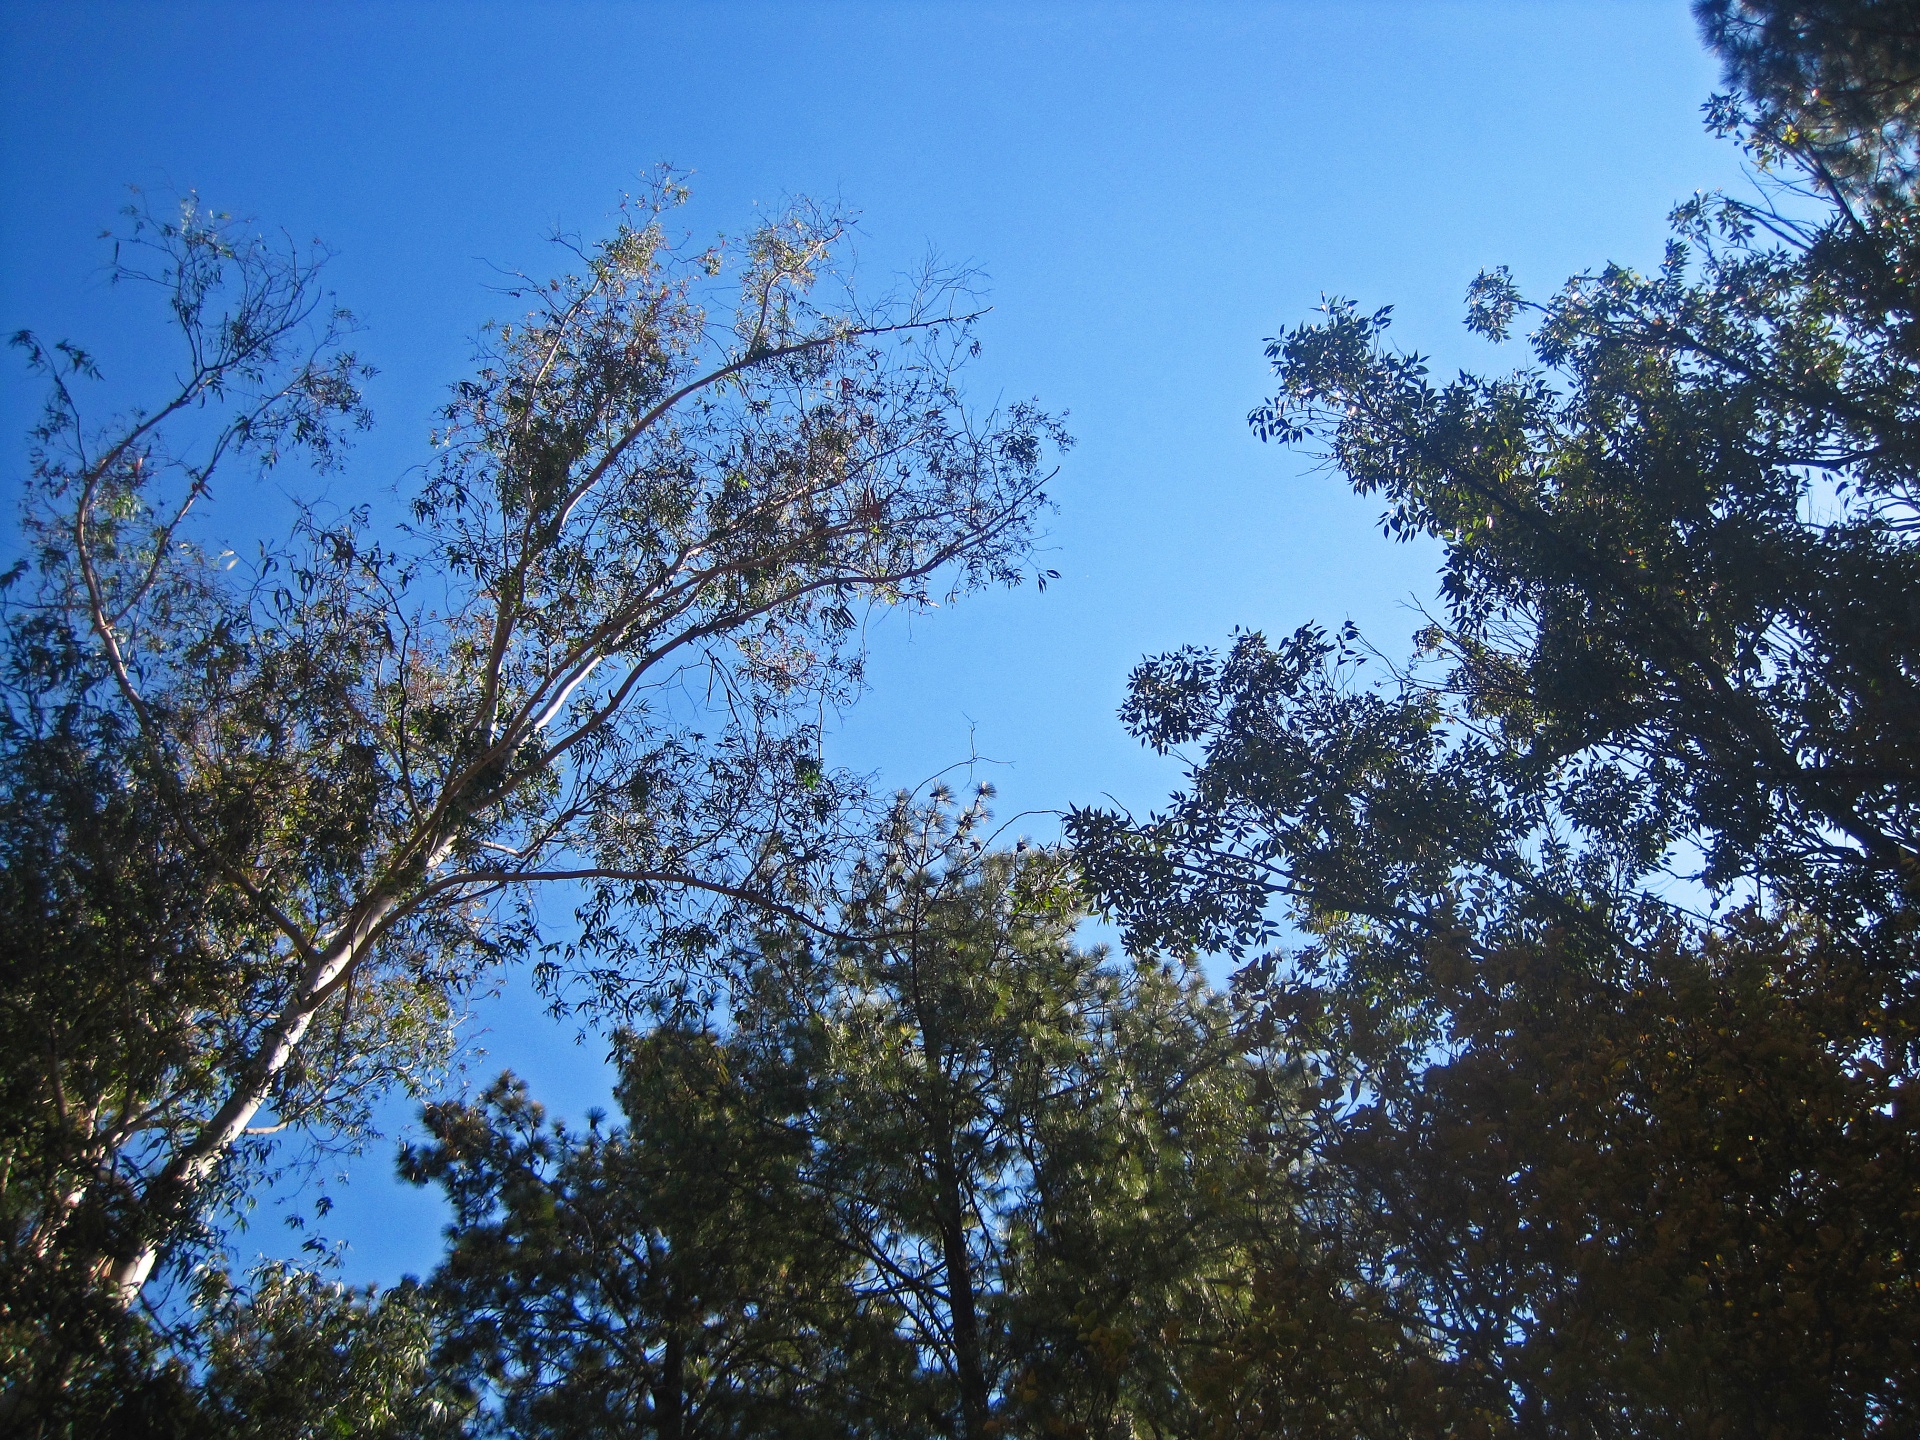 Upwards View Of Tree Tops